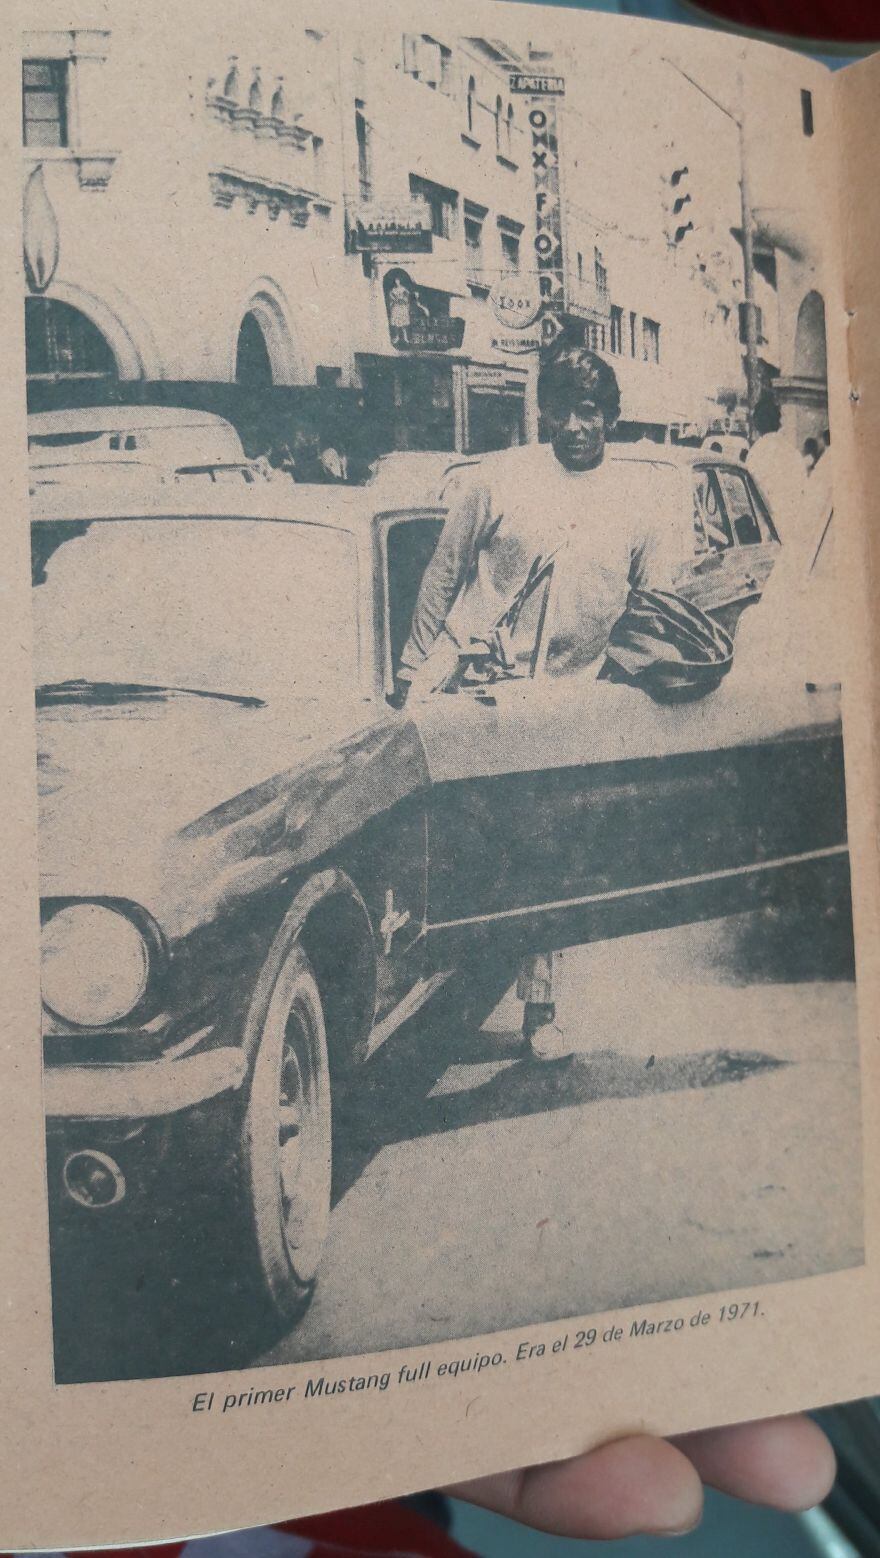 Hugo Sotil y su primer Mustang full equipo, en 1971.